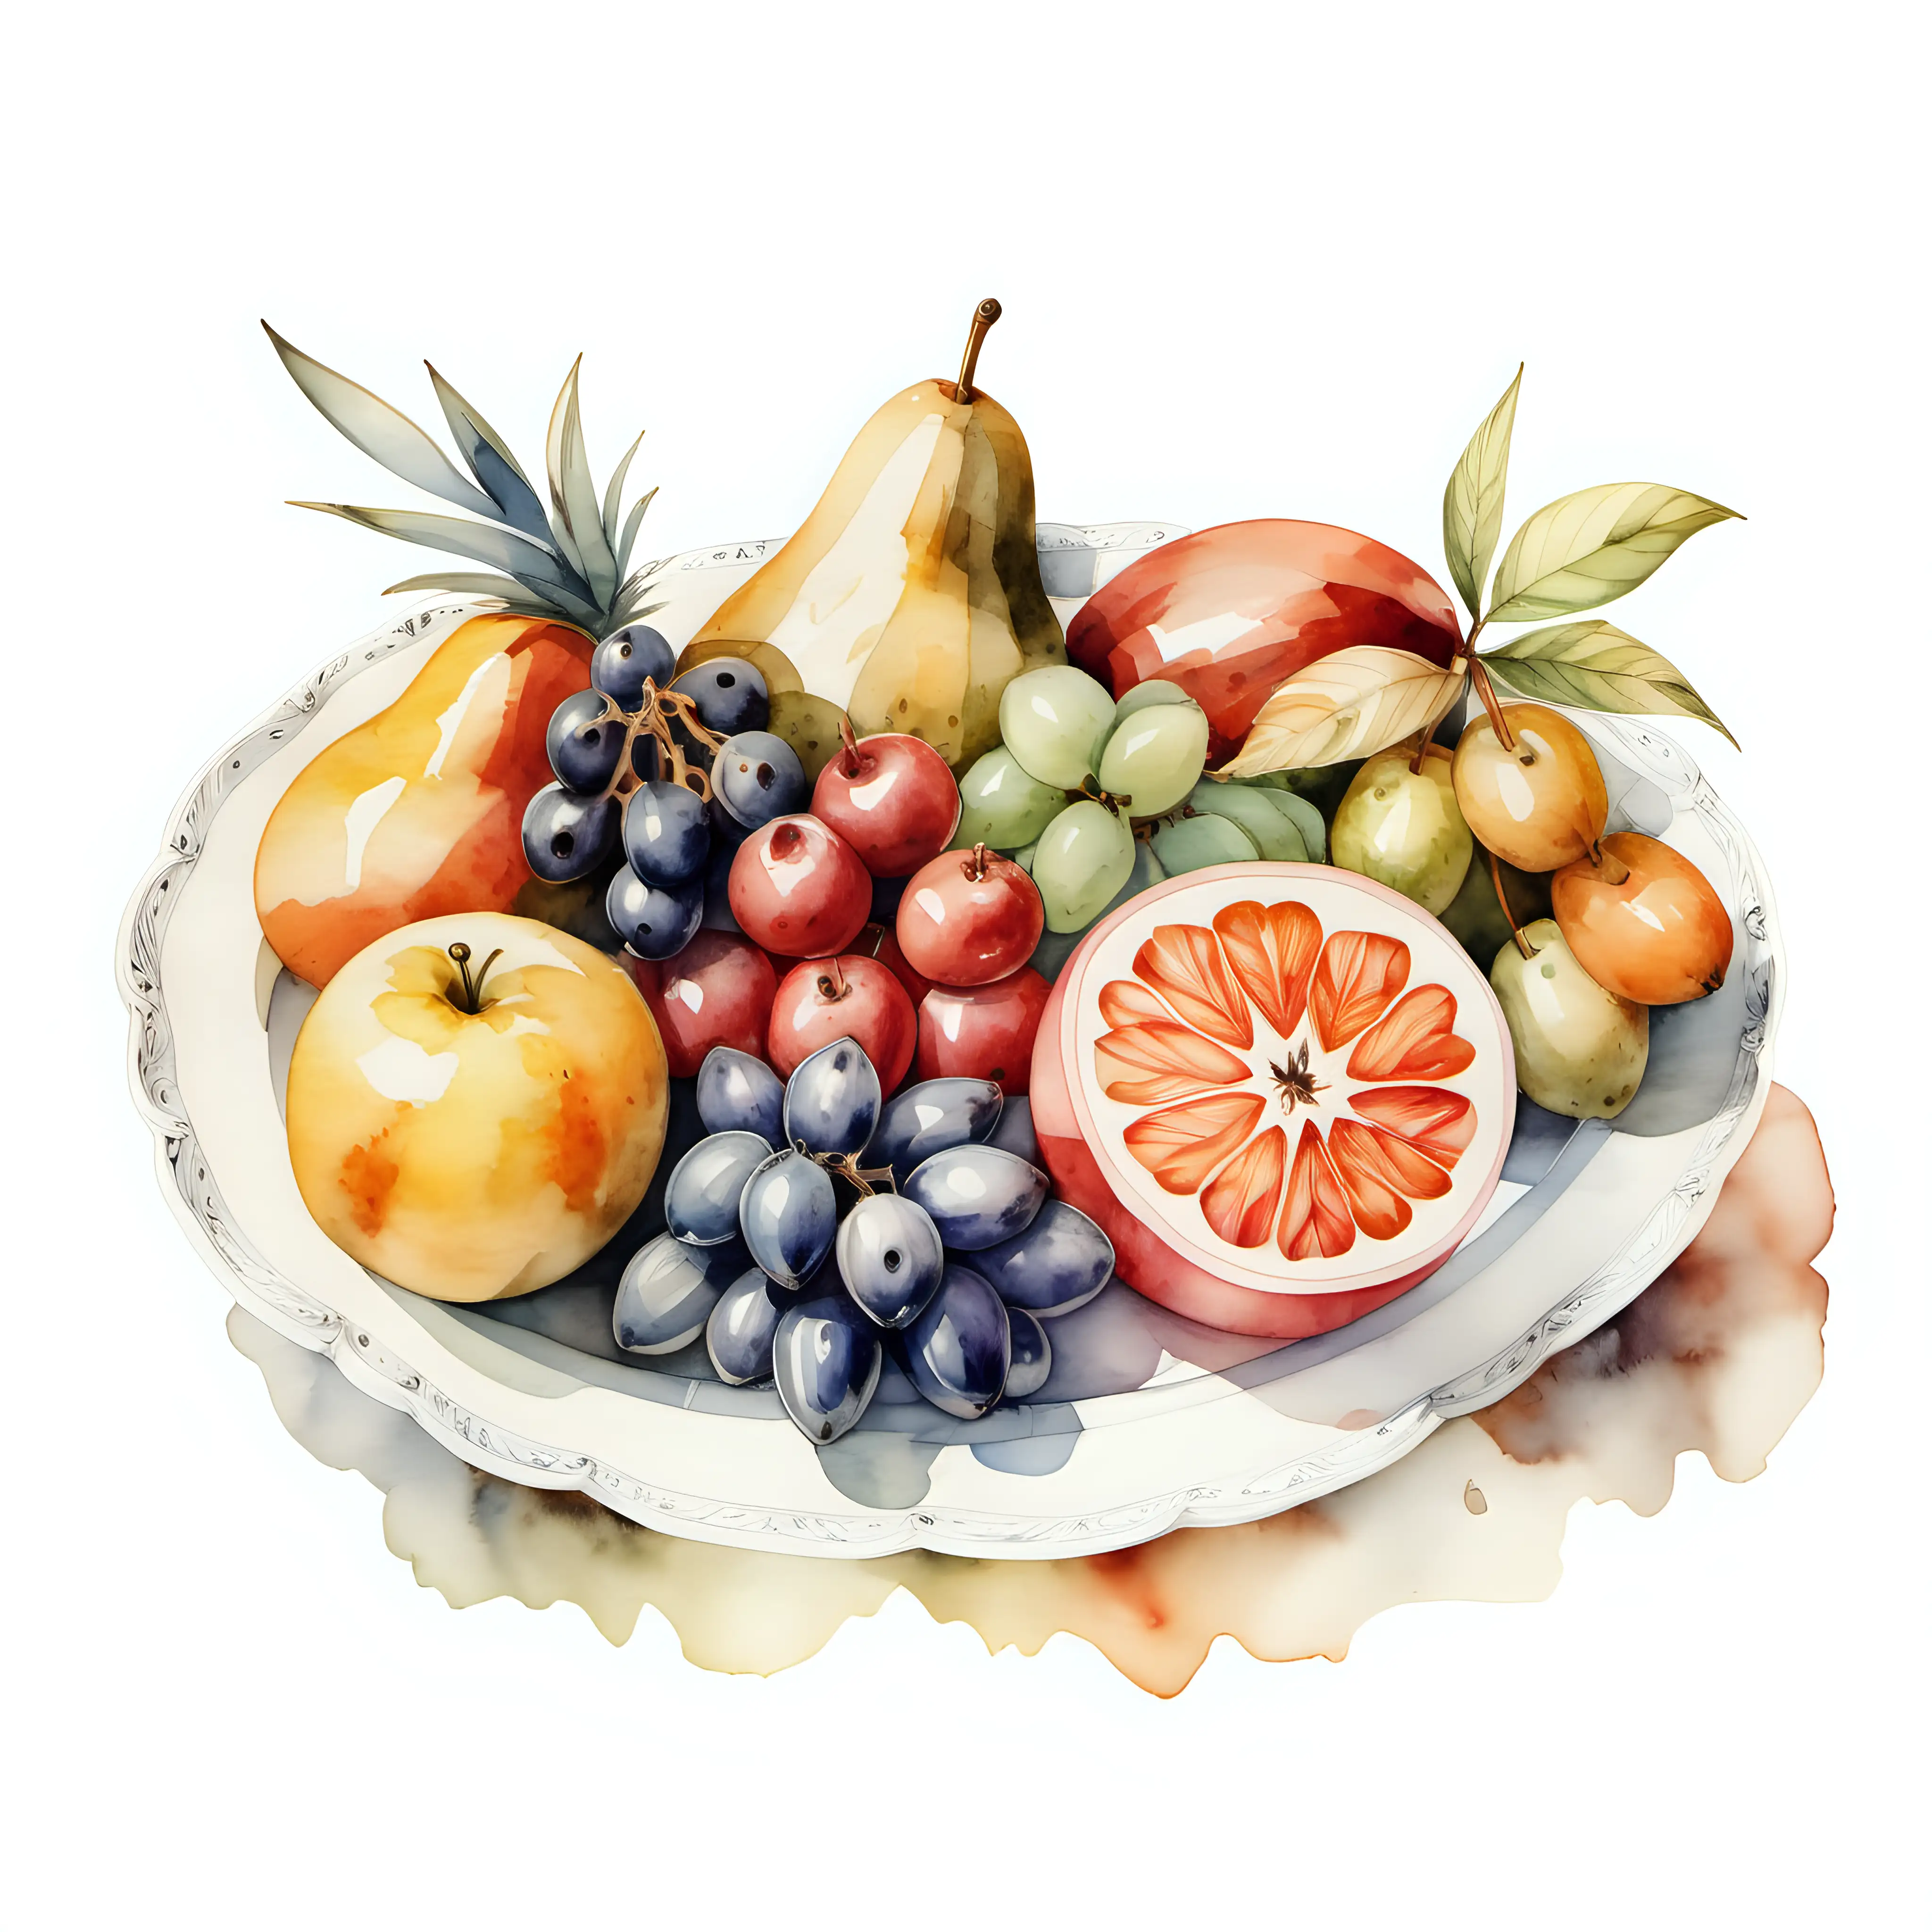 Vintage style watercolour Mediterranean fruit platter on plain white background